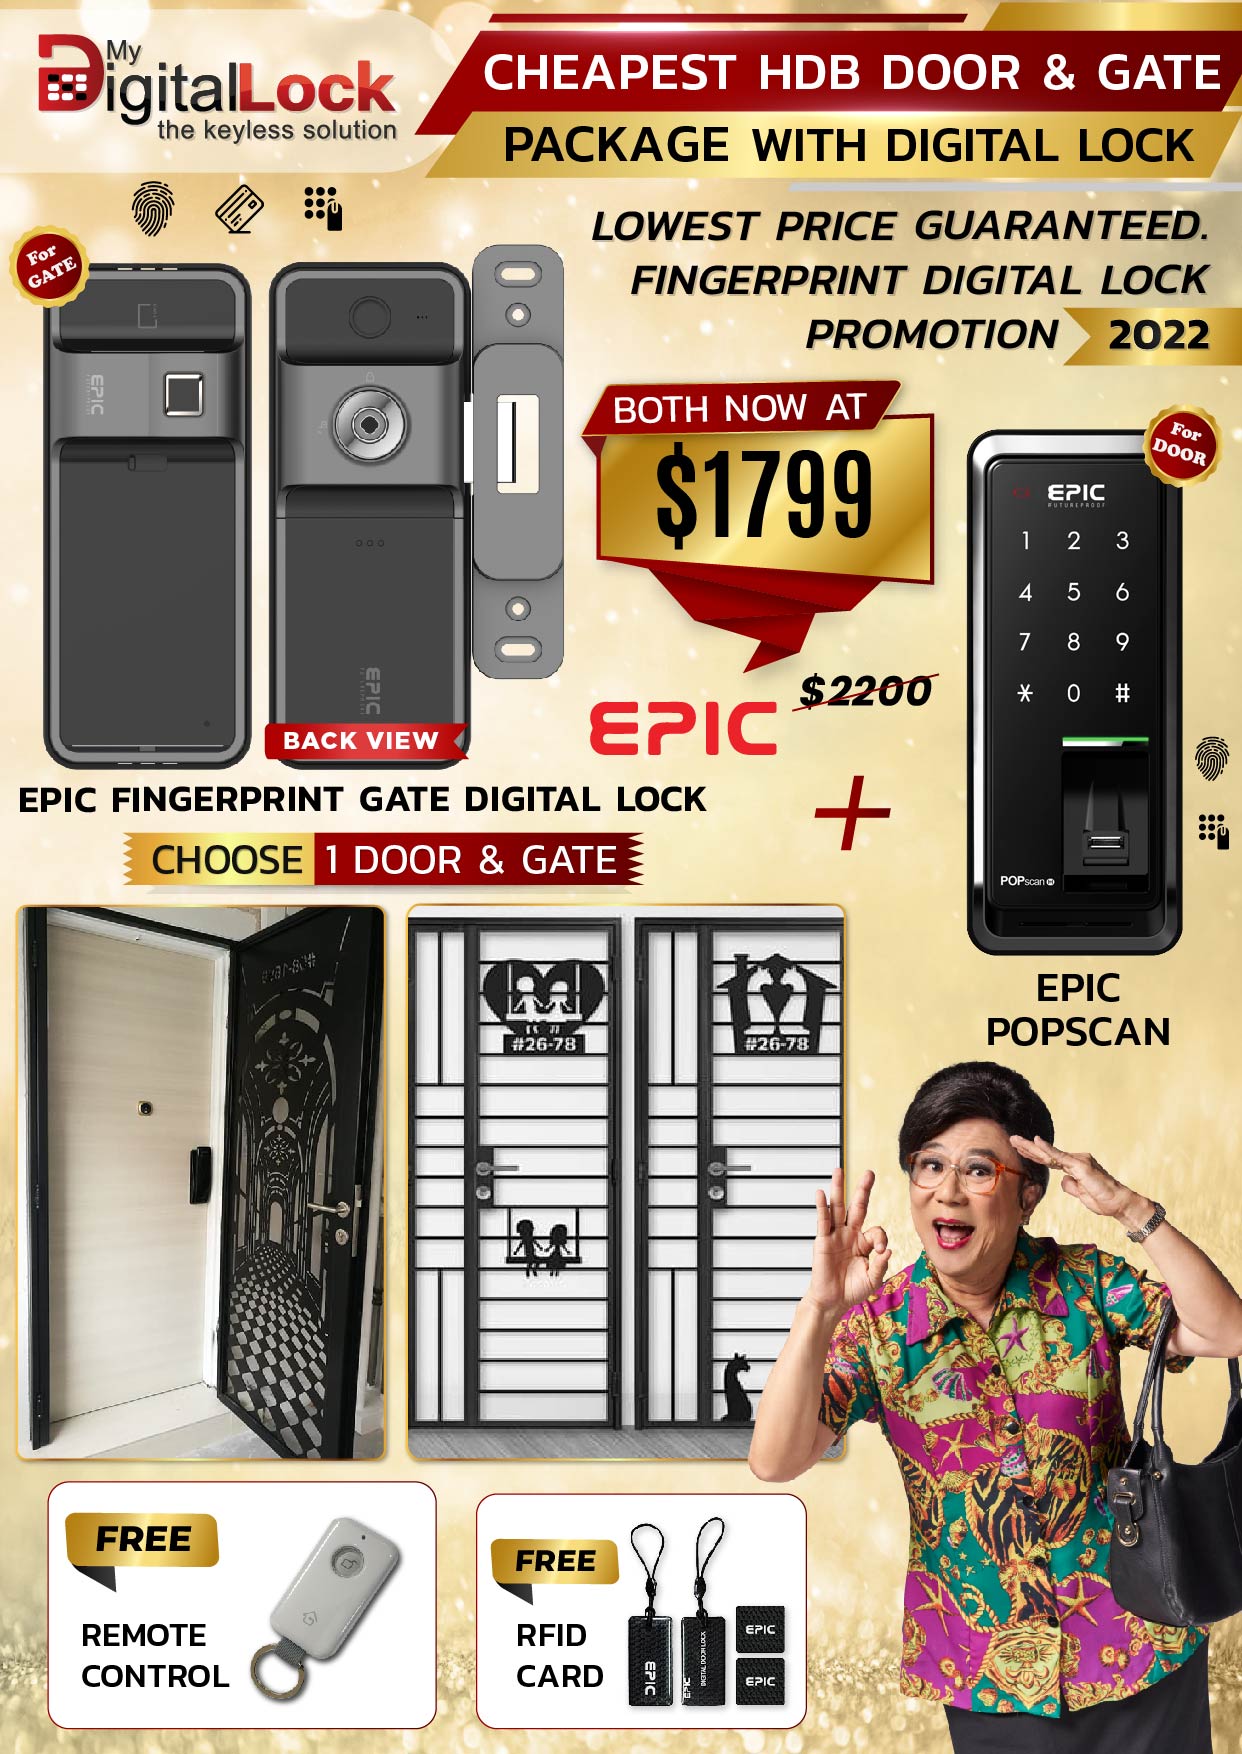 Lowest-Price-Guarenteed-Fingerprint-Digital-Lock-Promotions-2022